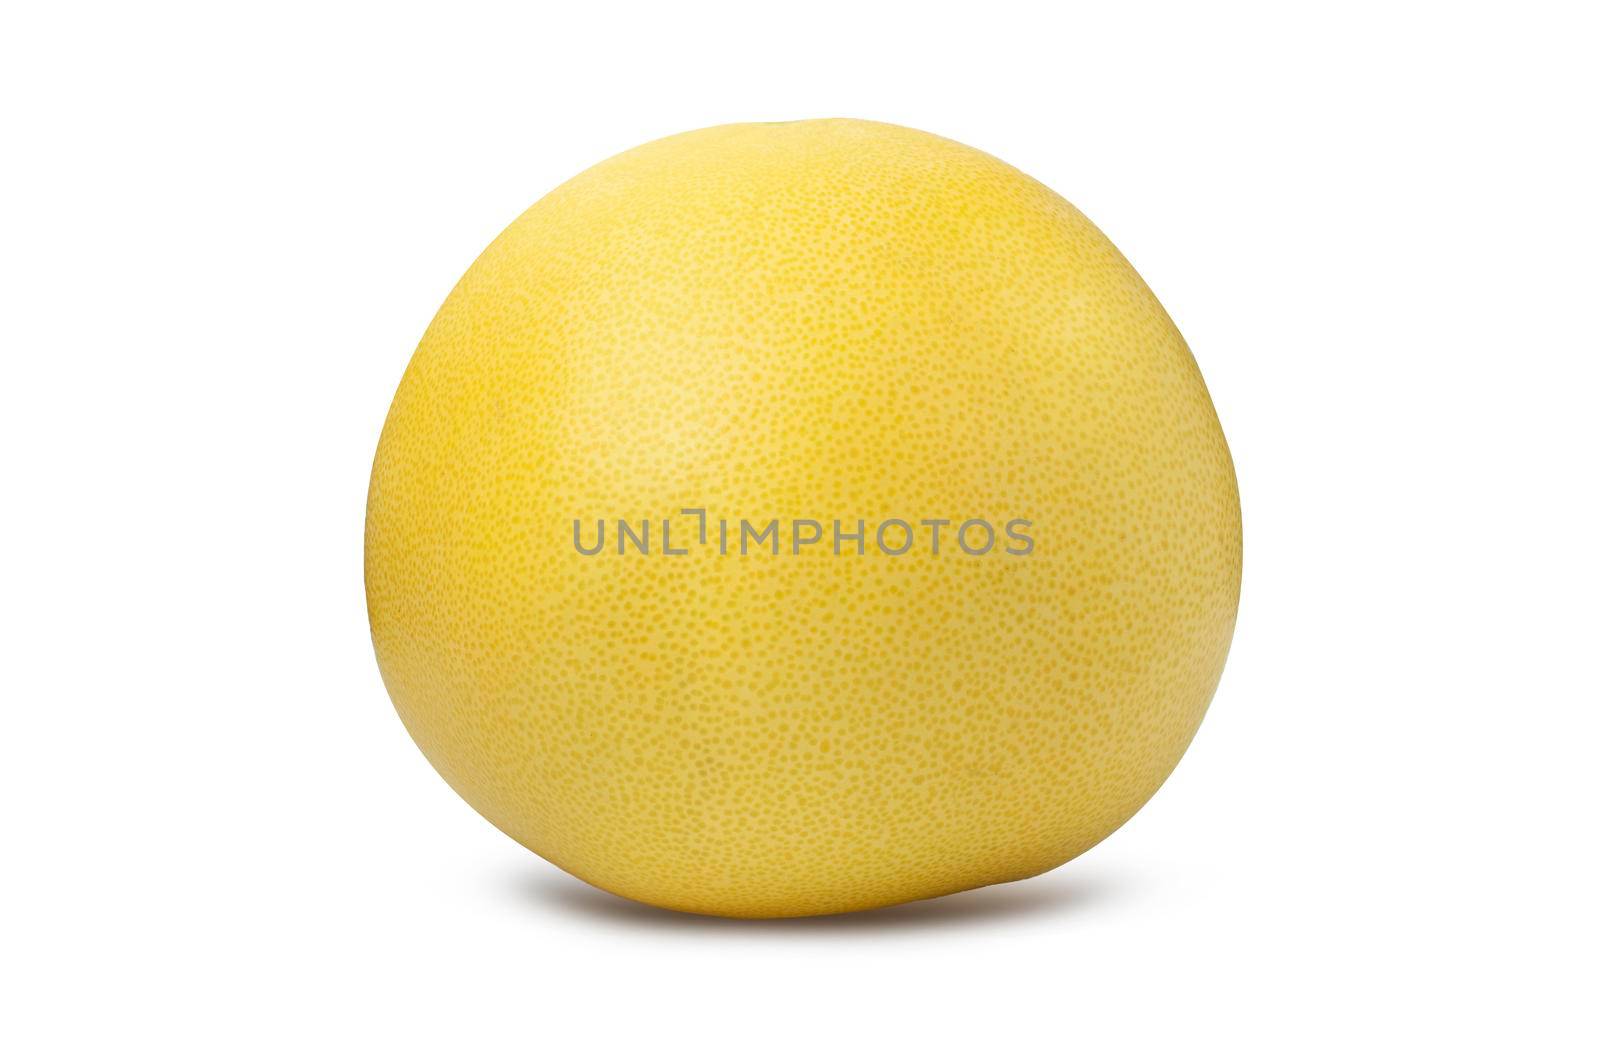 Pomelo citrus fruit isolated on white background by SlayCer